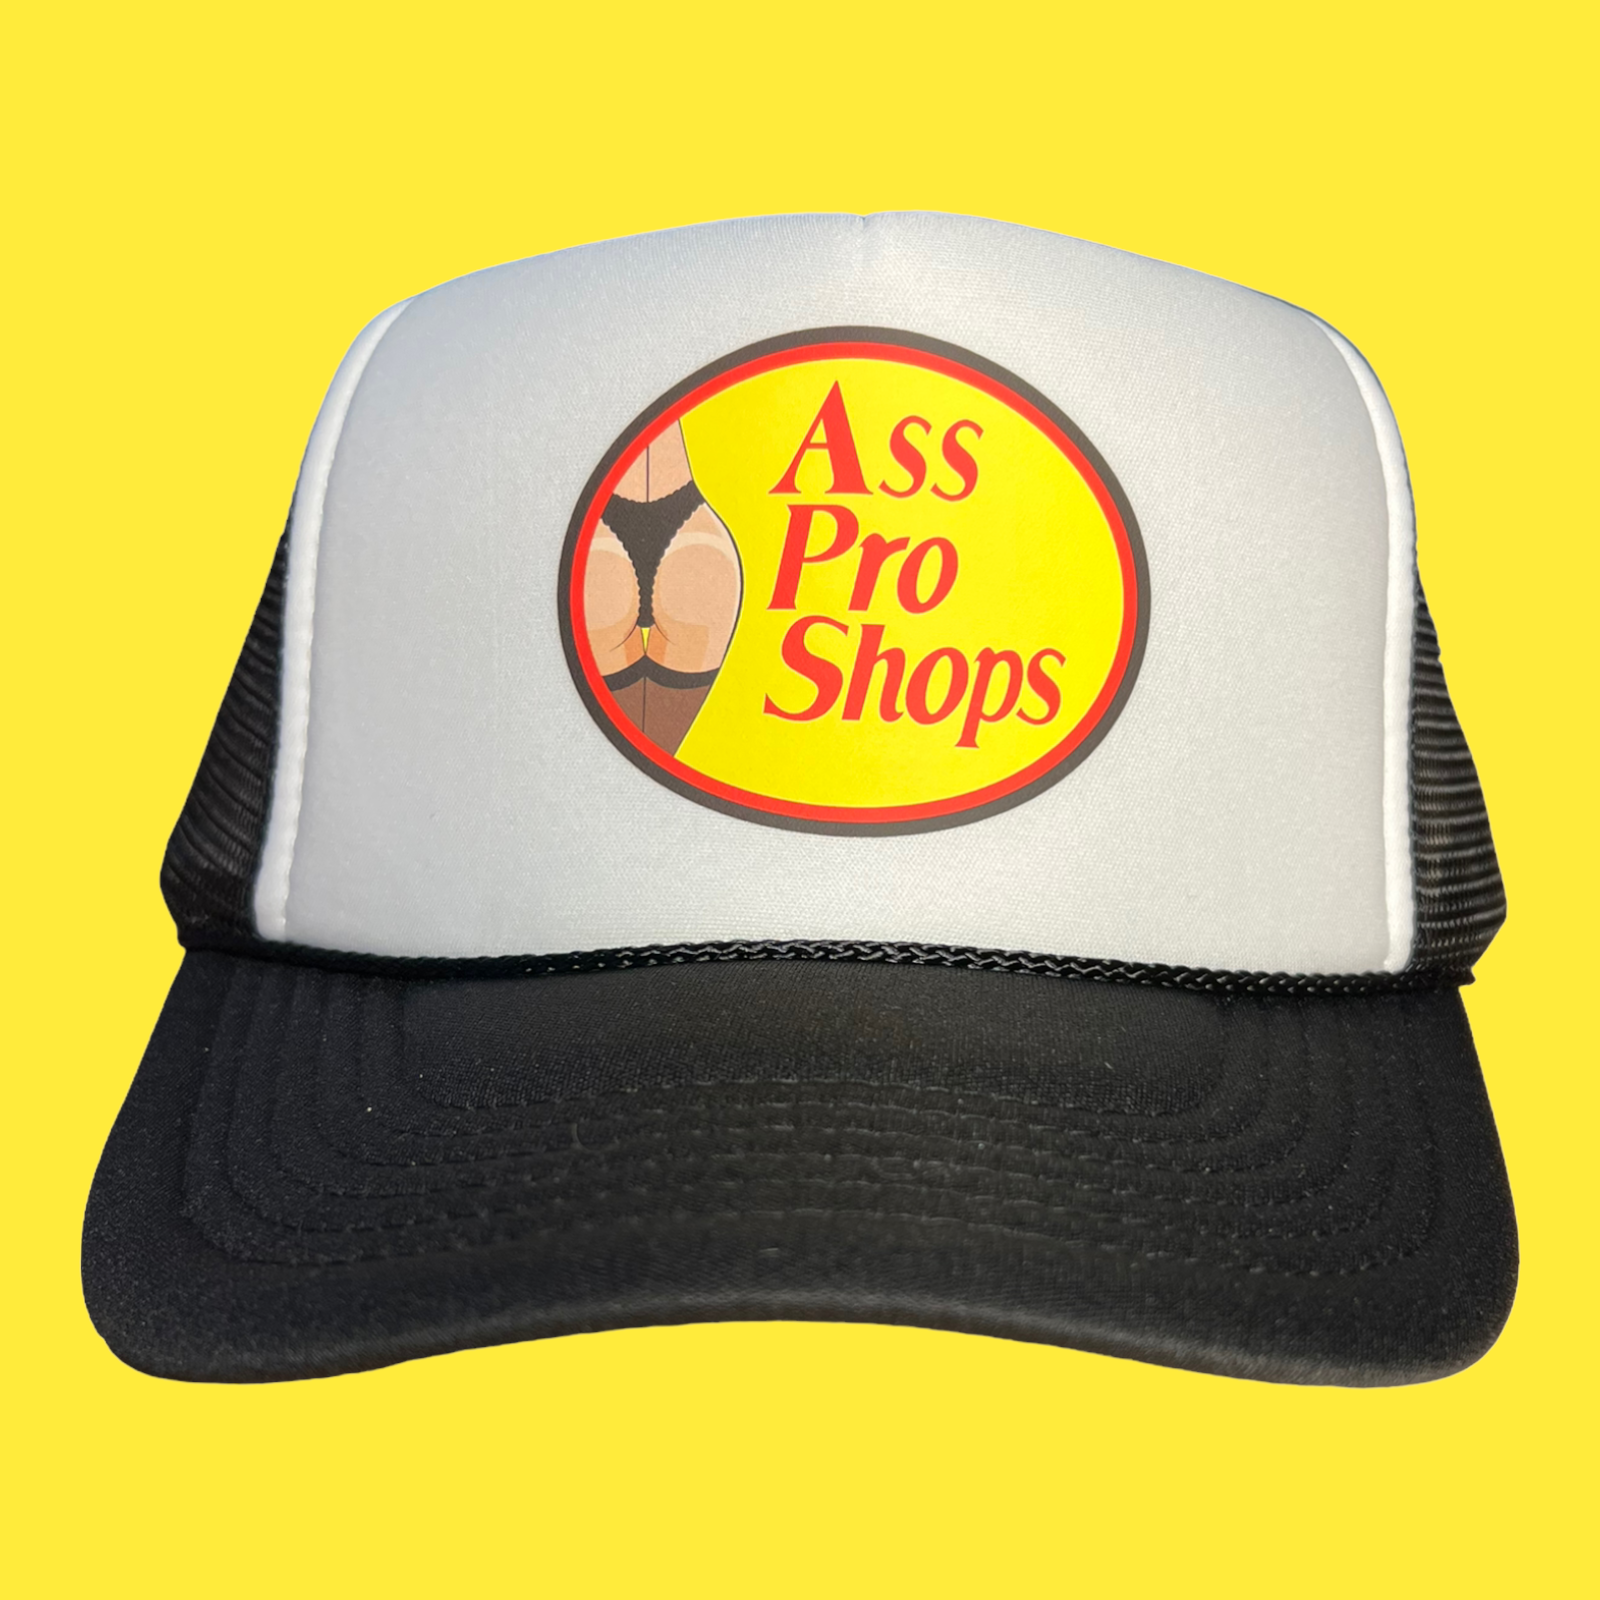 Ass Pro Shops Trucker Hat Funny Trucker Hat Black/White – FunnyTruckerHats